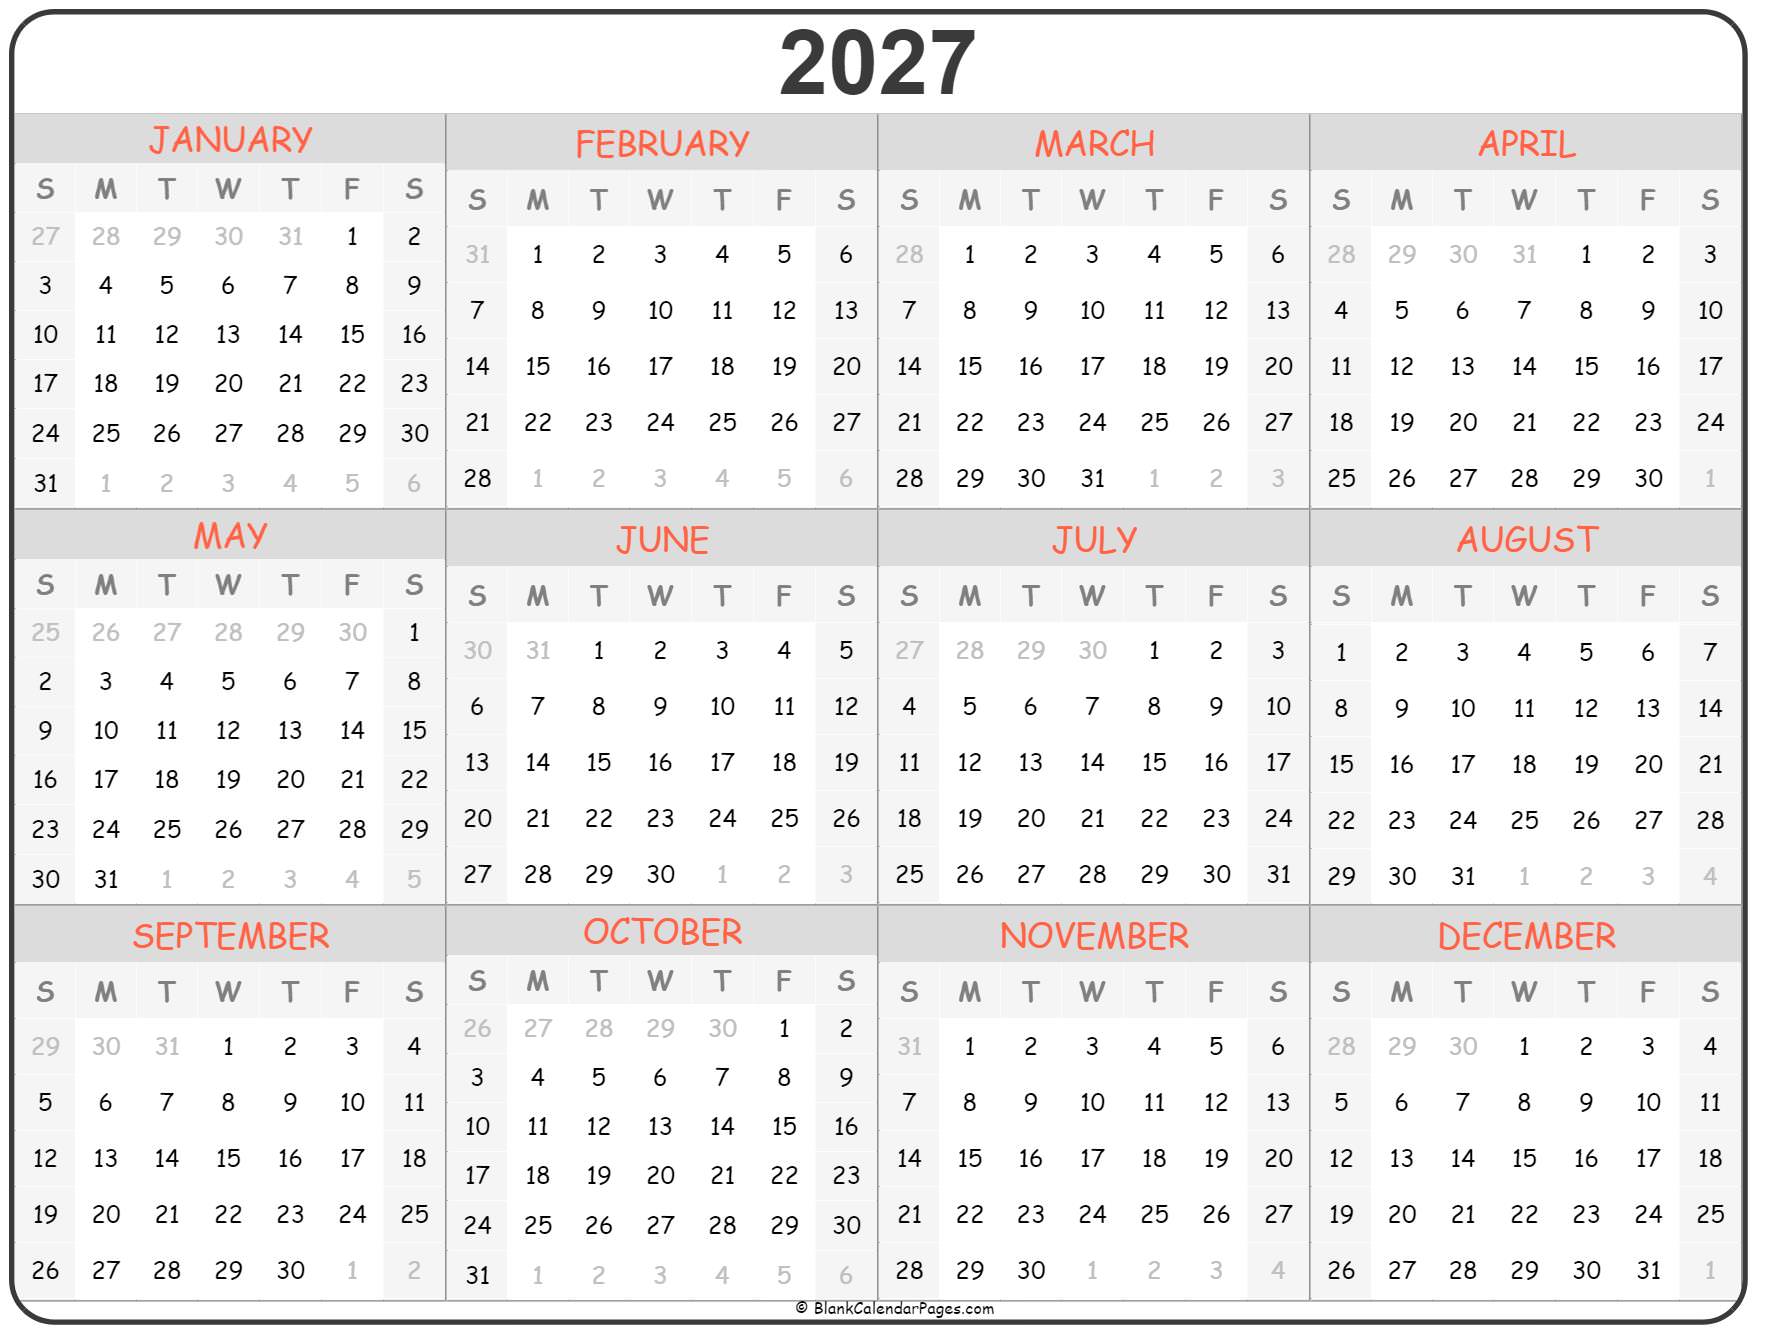 2027 year calendar yearly printable